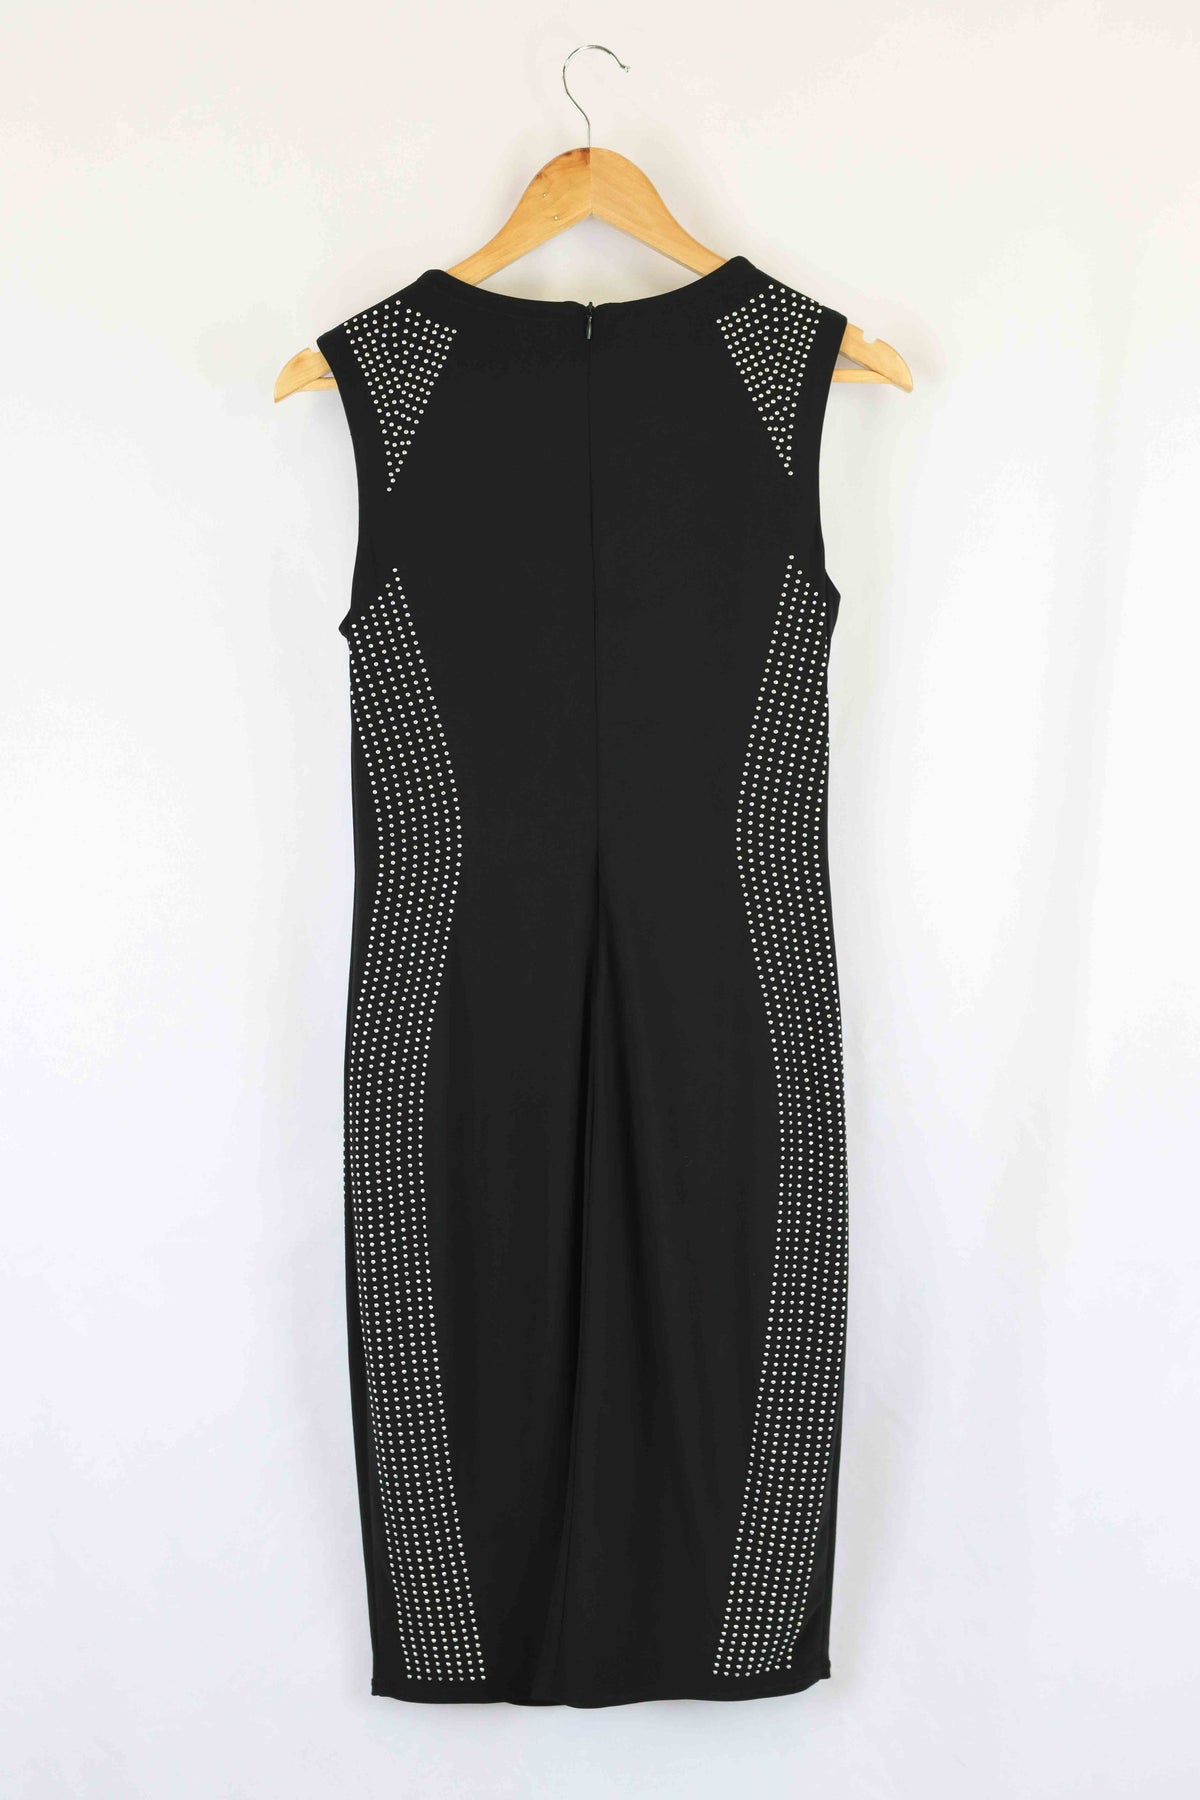 Joseph Ribkoff Black Studded Dress 8